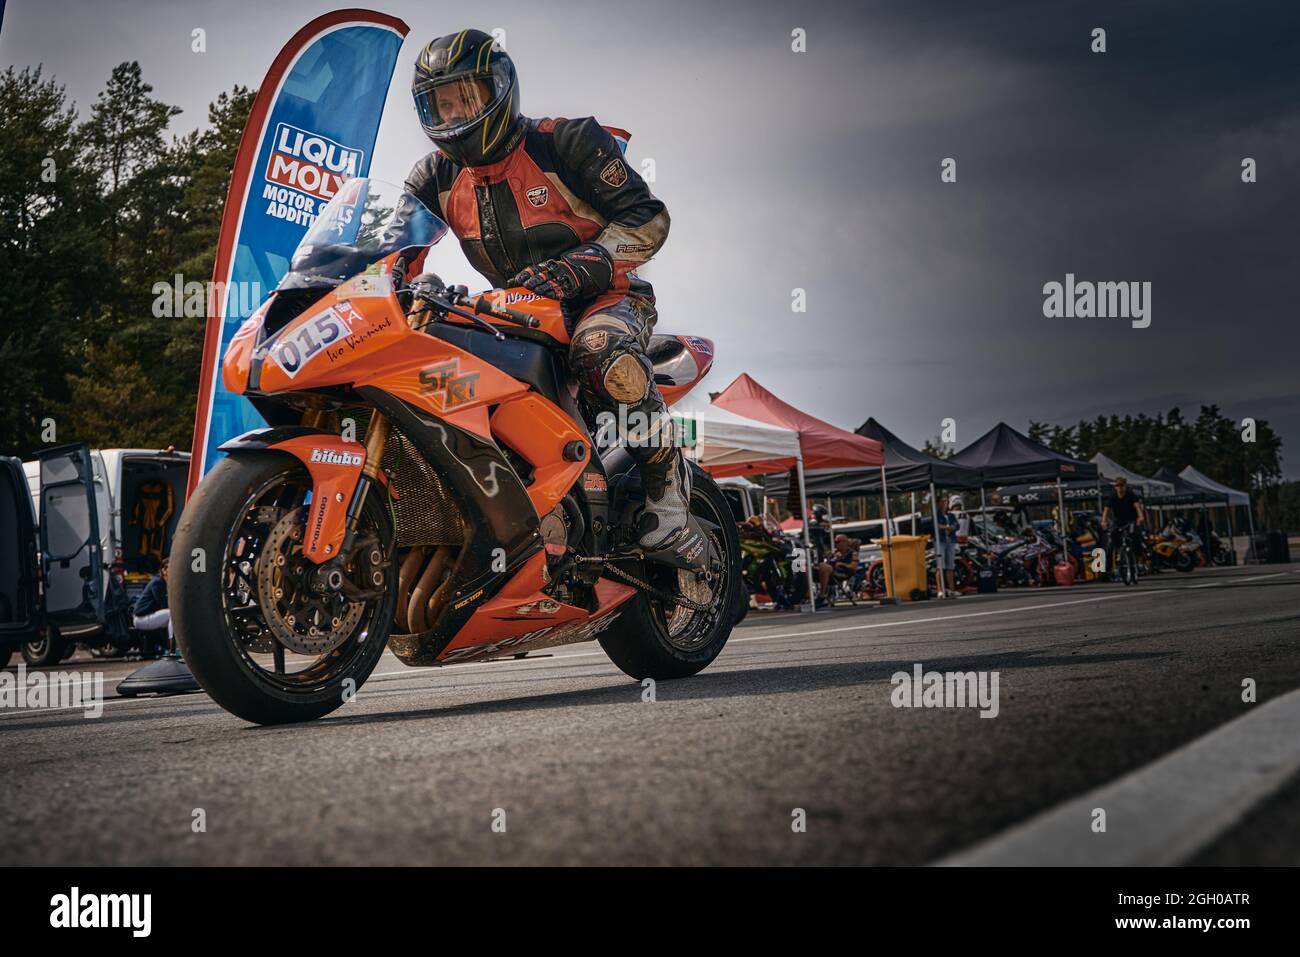 10 05 2021 Lithuania Kaunas Moto rider Motorcyclist rides at fast 